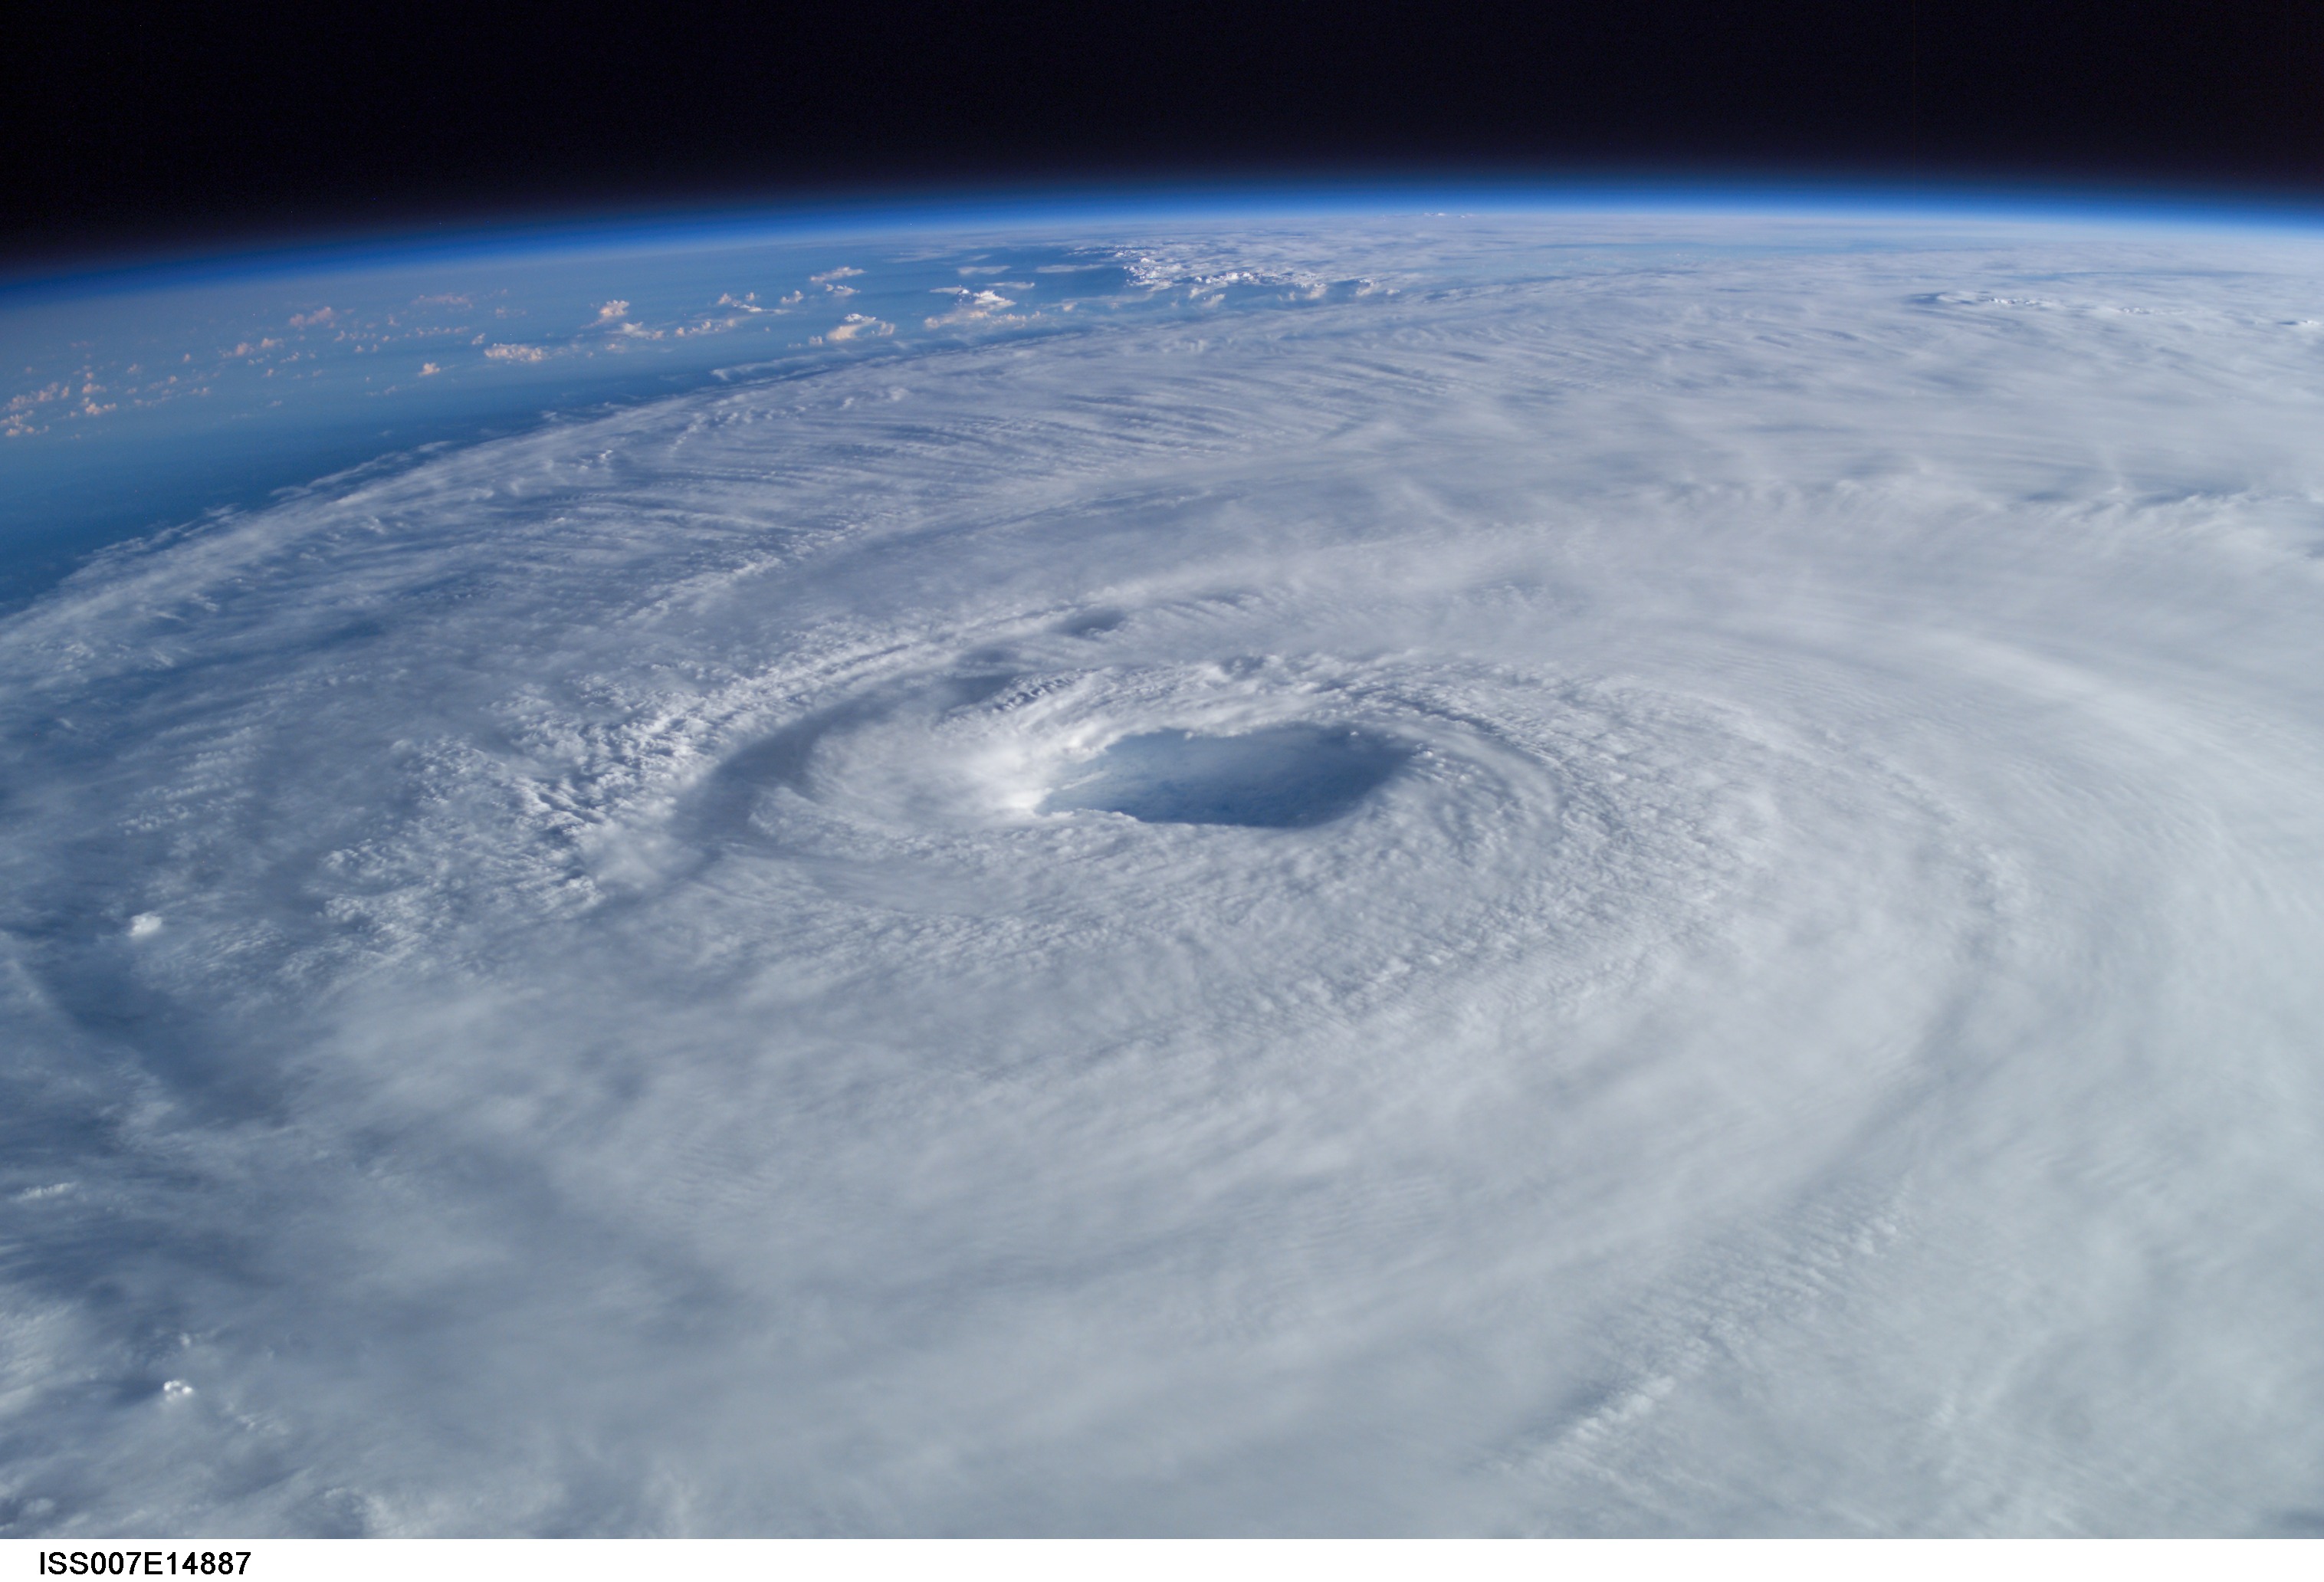 Station Photographs Hurricane Isabel | NASA